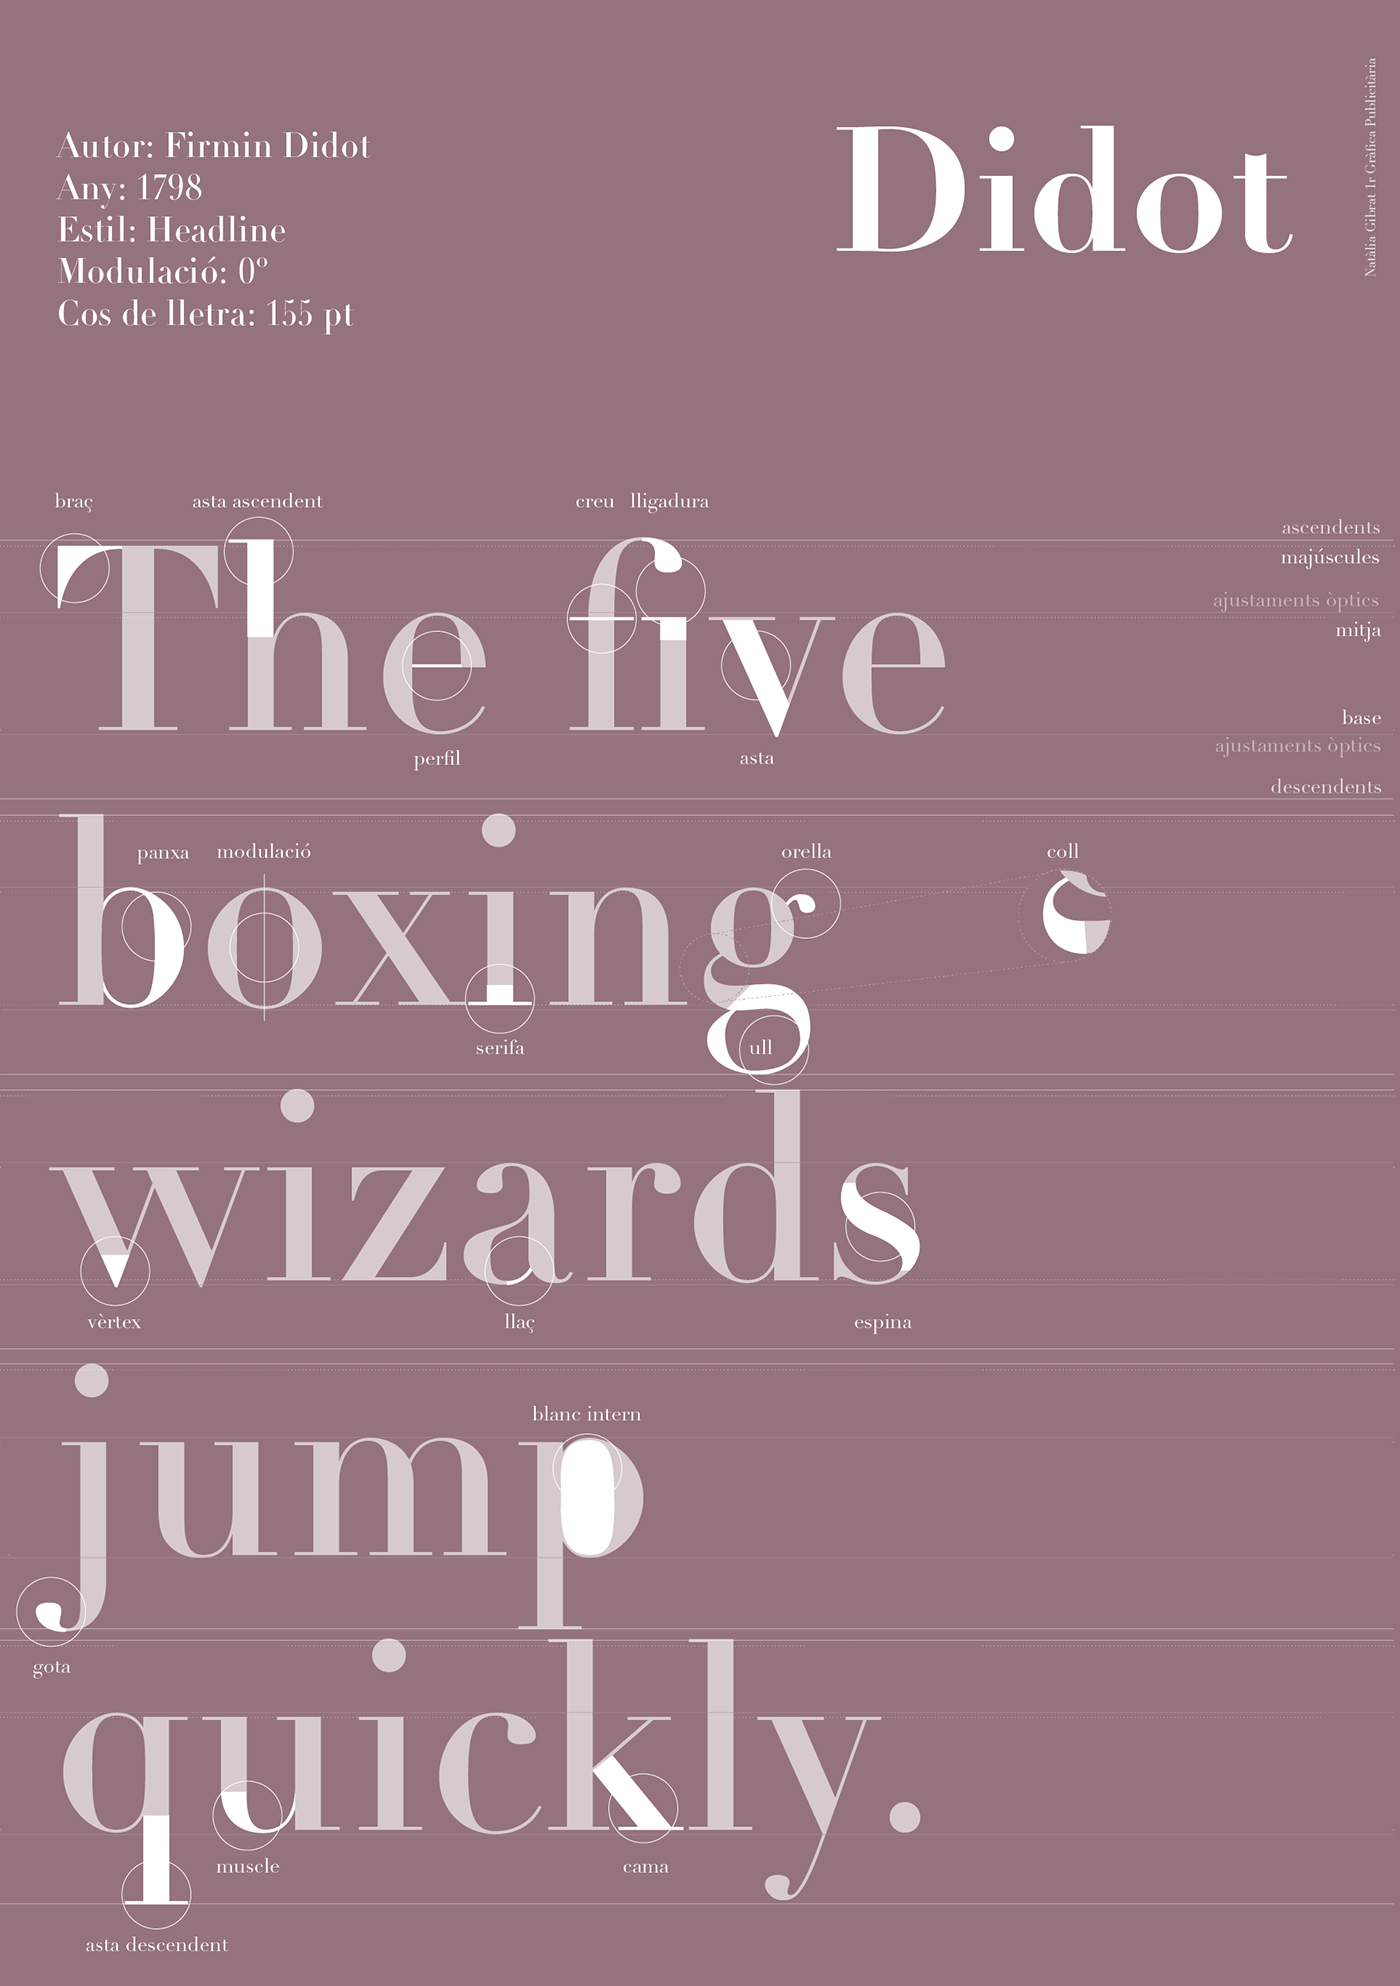 adobe illustrator didot font Didot Poster Didot Typeface firmin font pangram tipografia tipography typographic